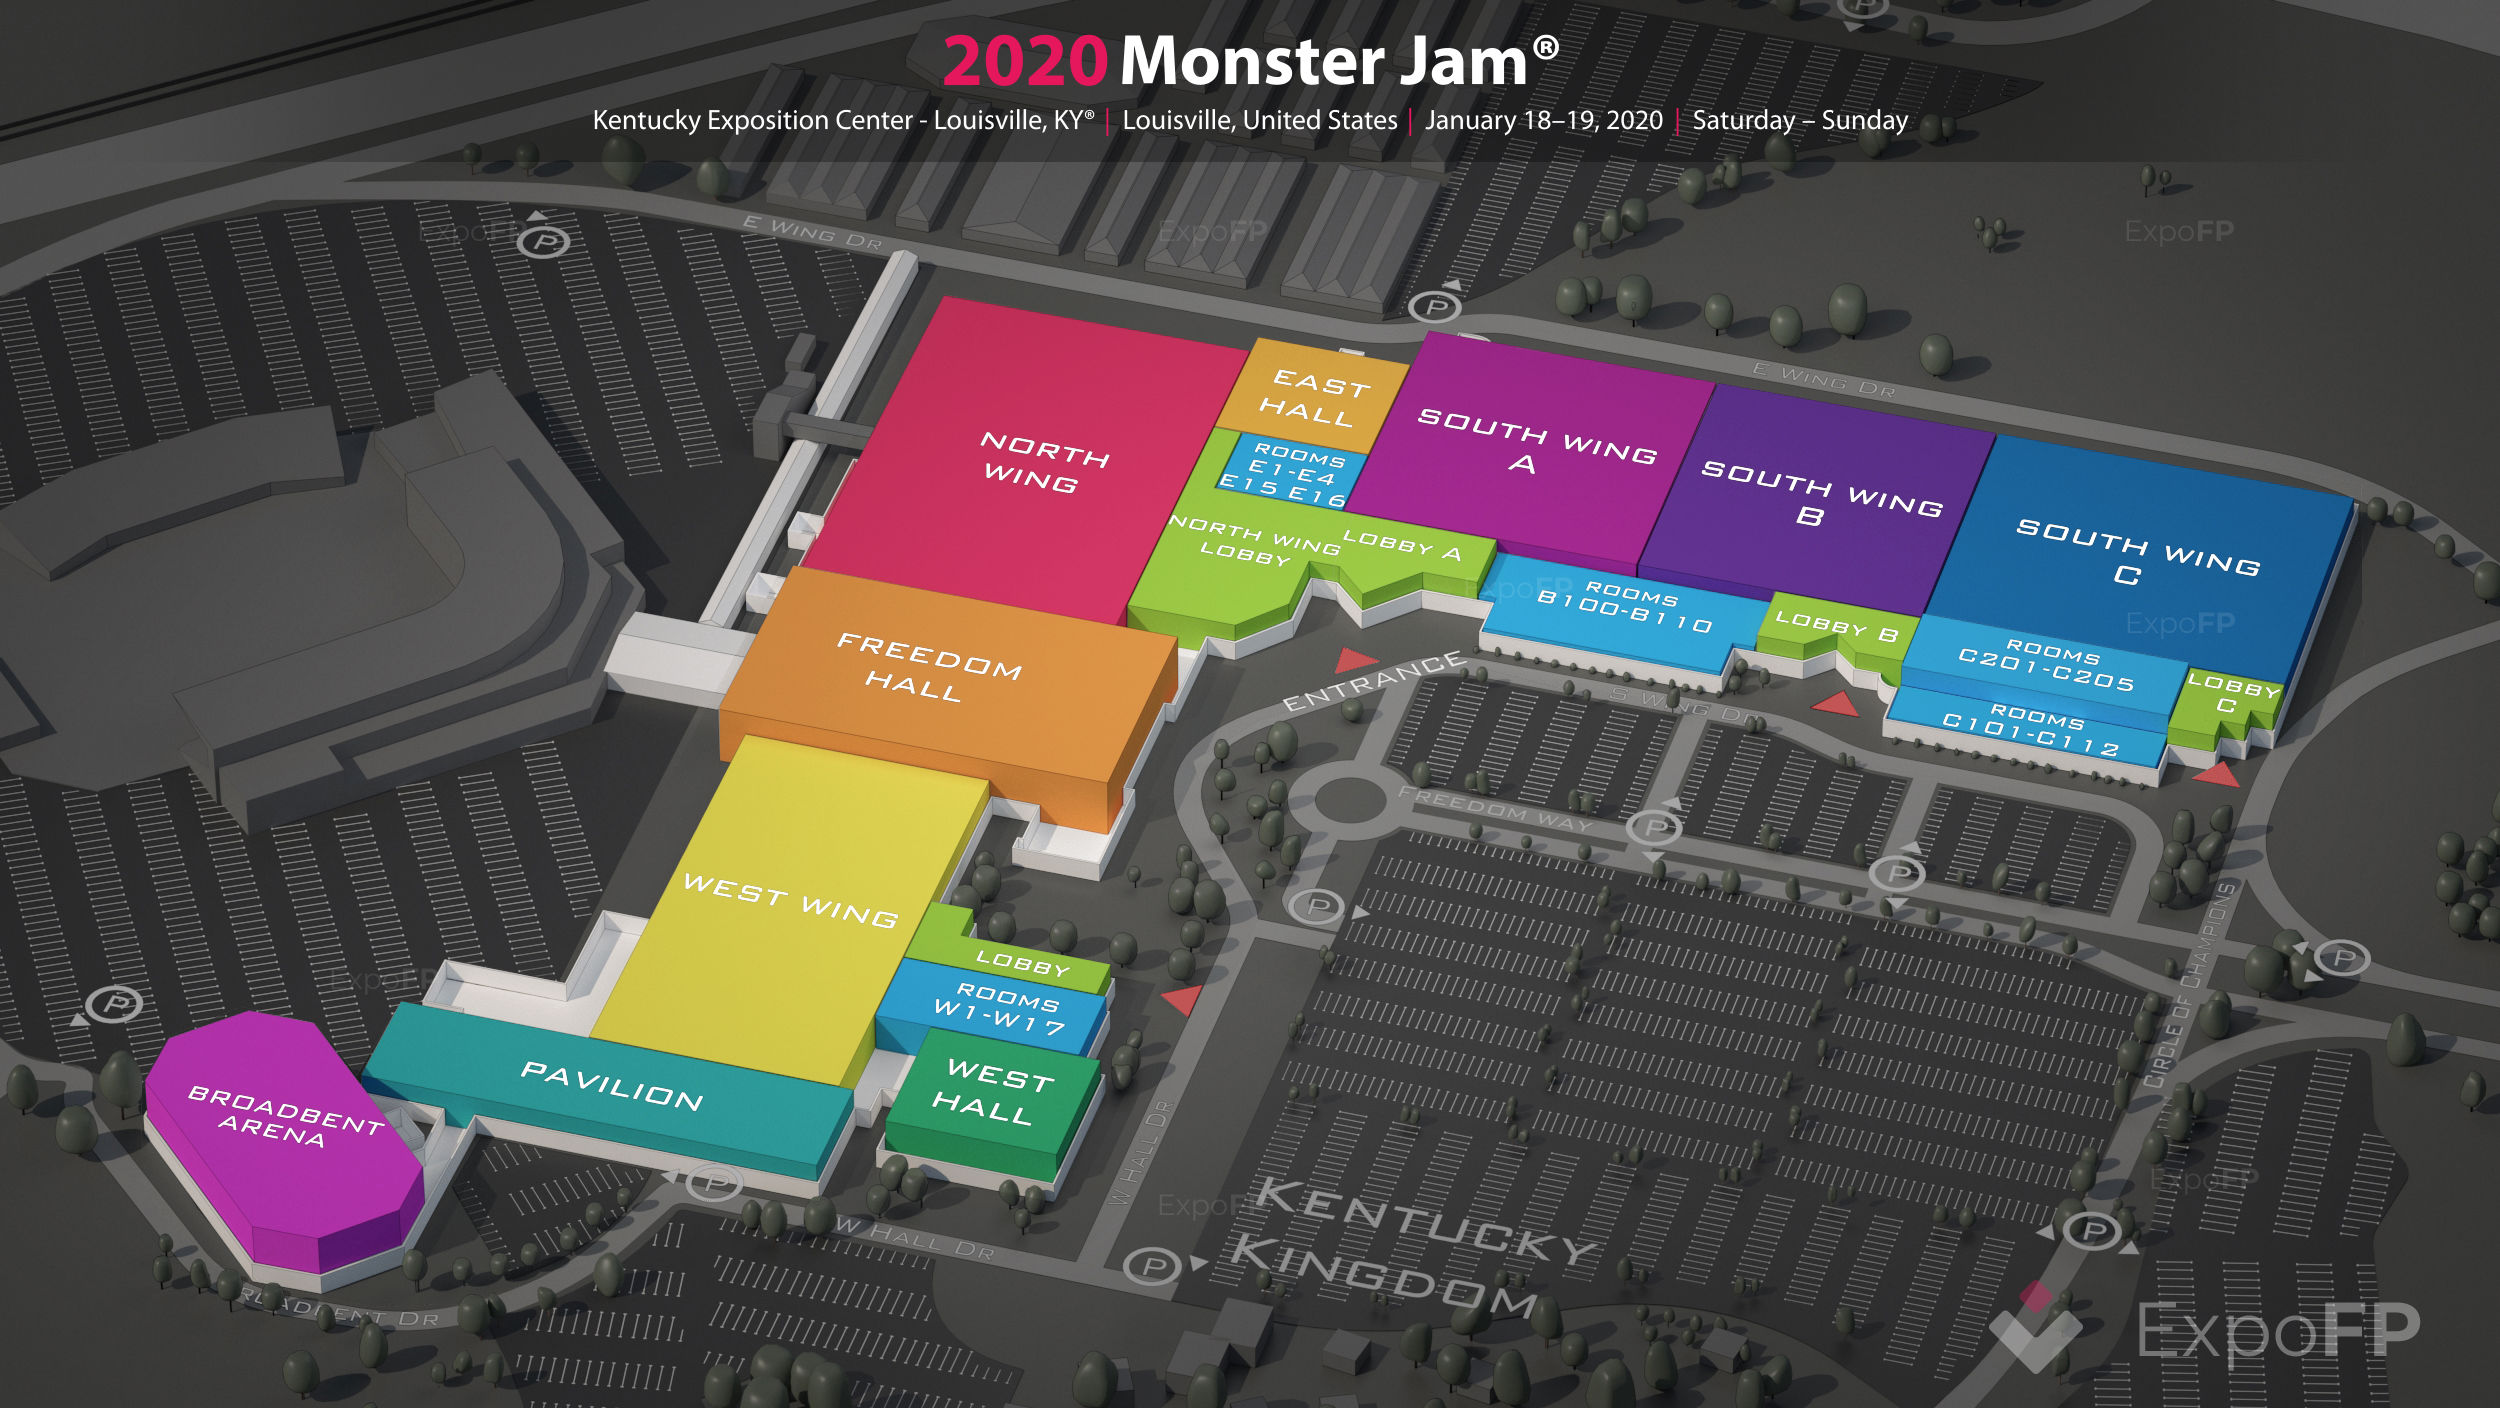 Monster Jam 2020 in Kentucky Exposition Center Louisville, KY